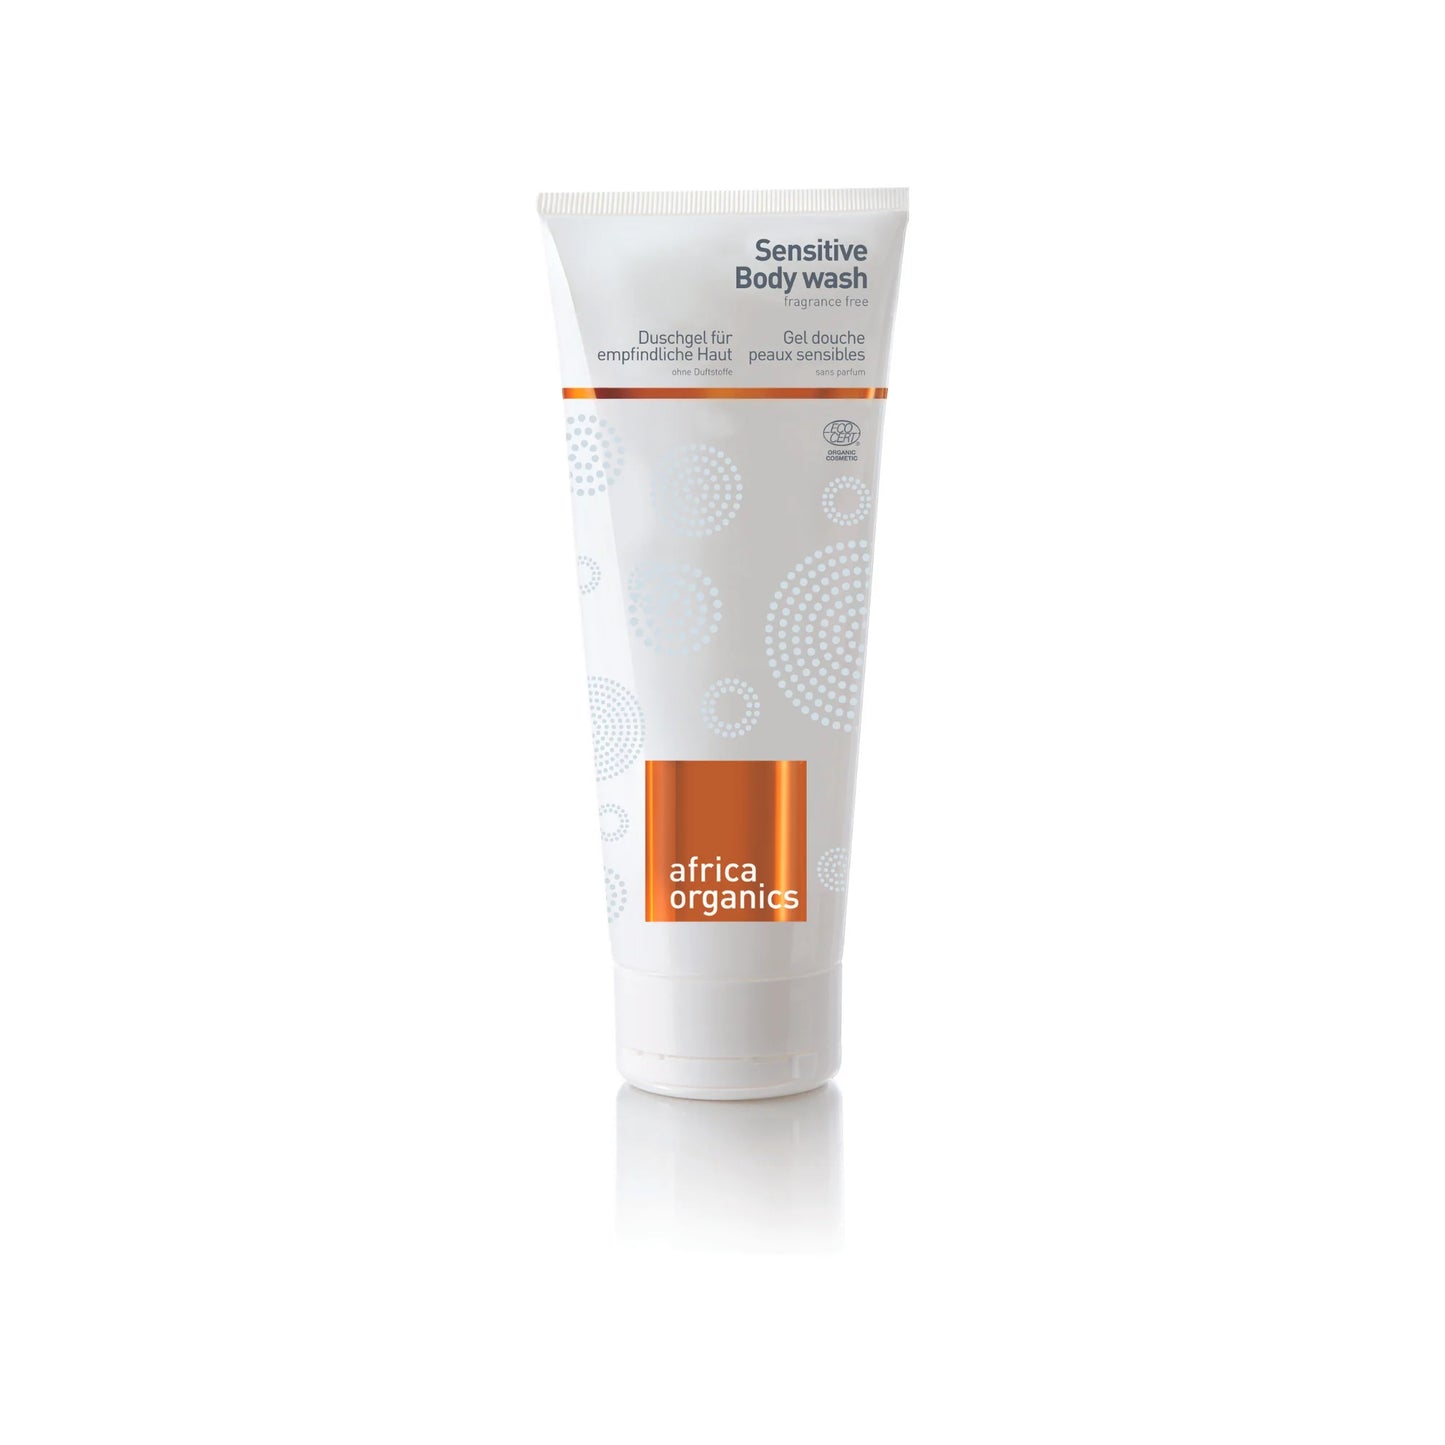 Sensitive Skin Wash- Gentle, pH balanced wash and calming lotion for sensitive skin.